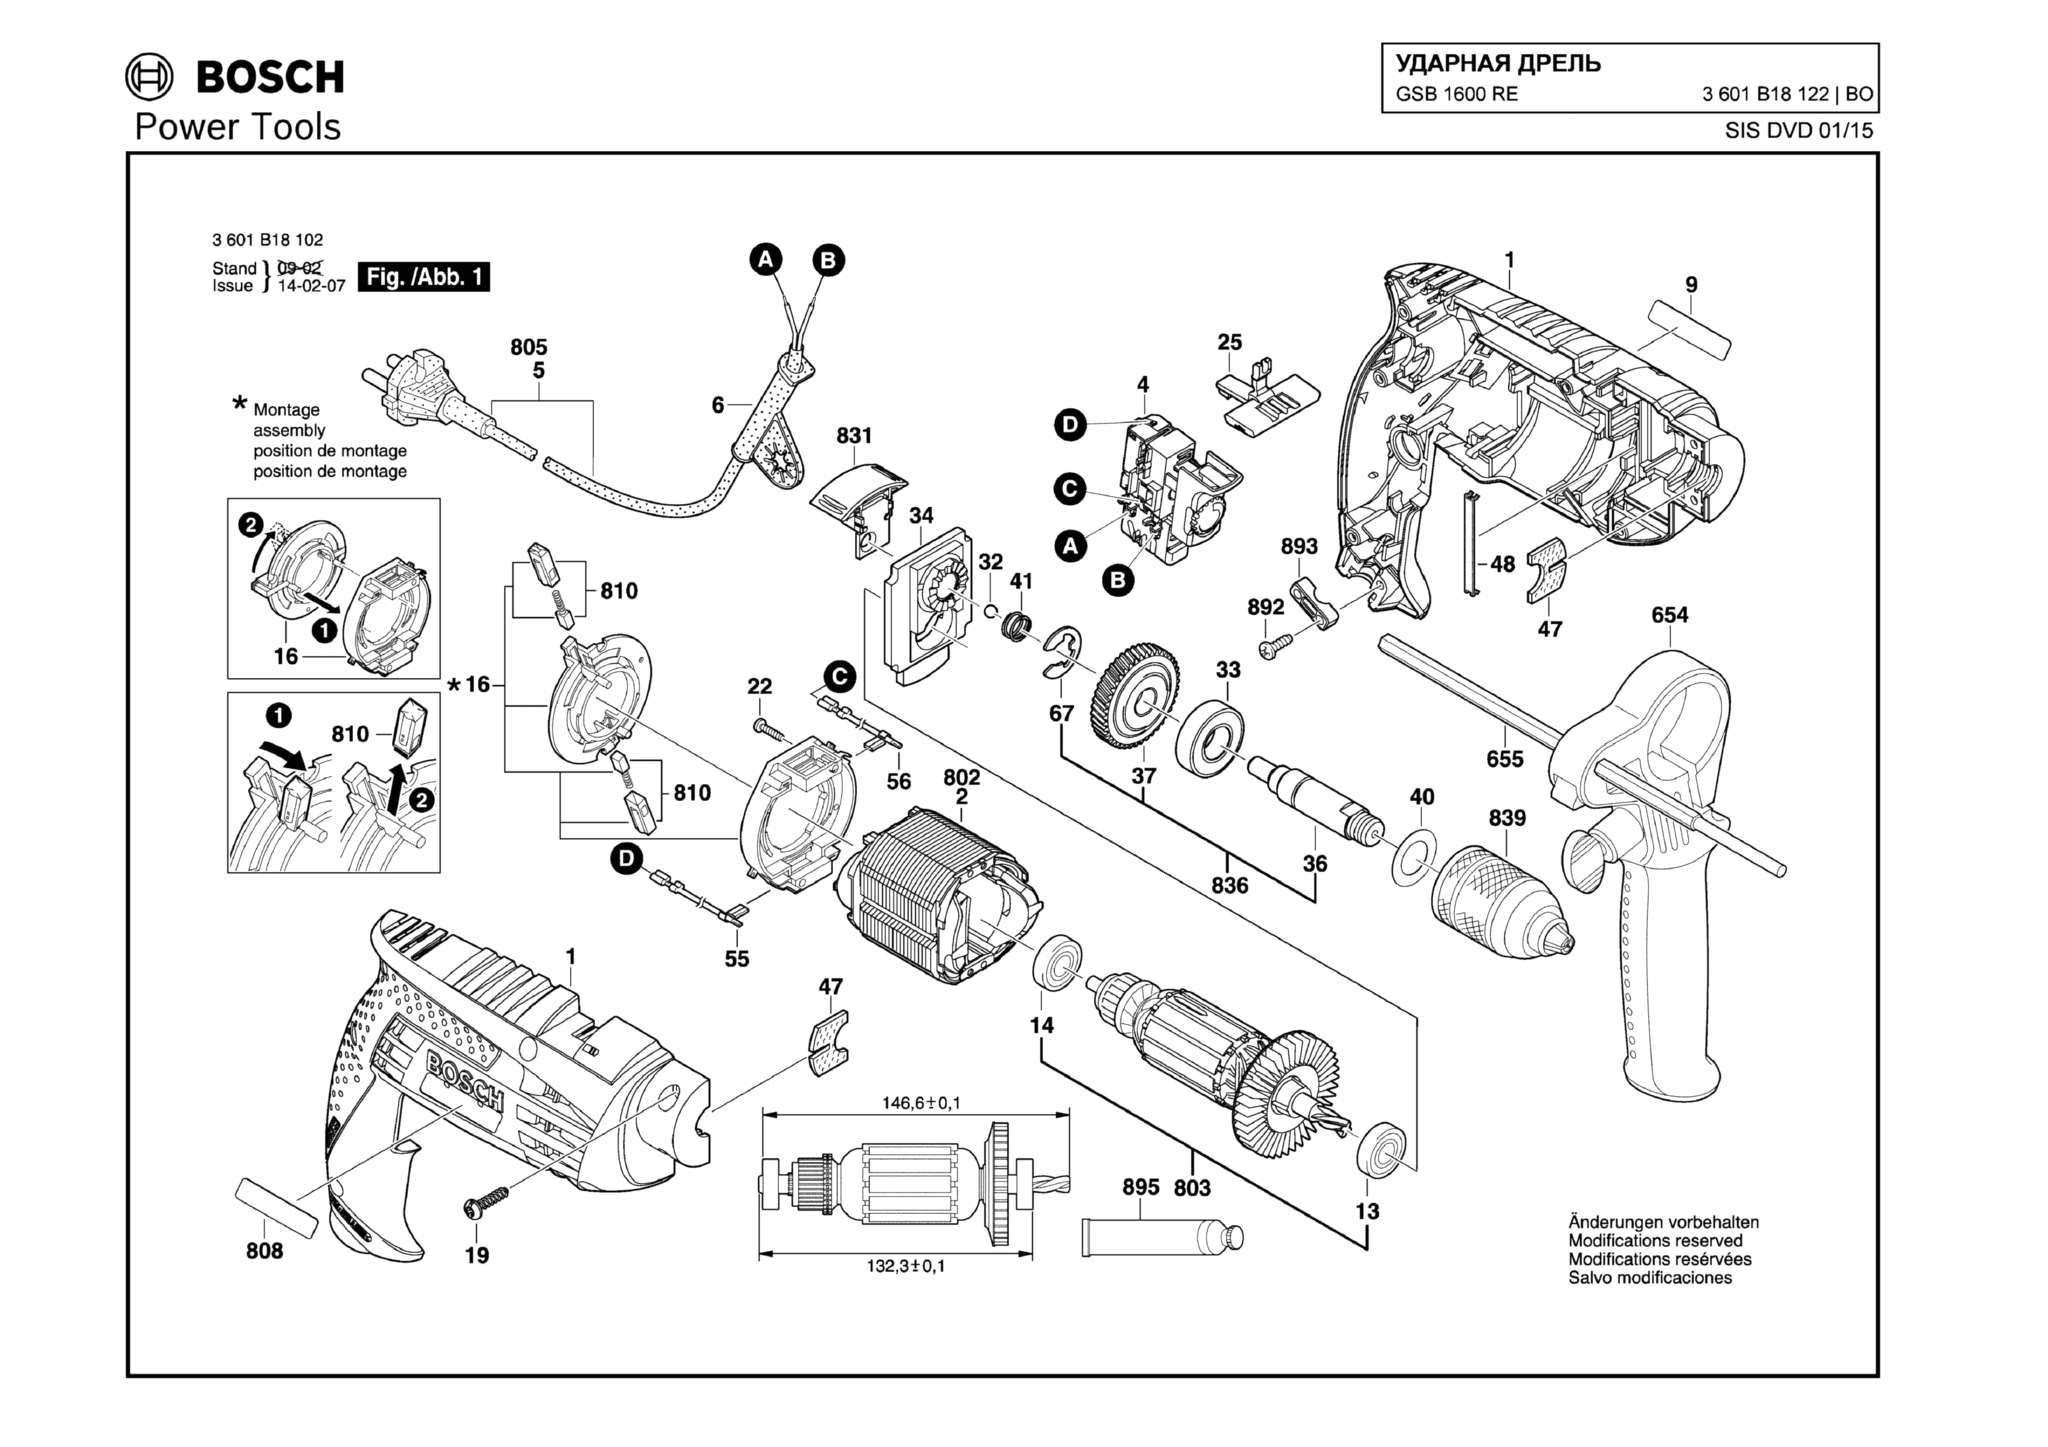 Запчасти, схема и деталировка Bosch GSB 1600 RE (ТИП 3601B18122)